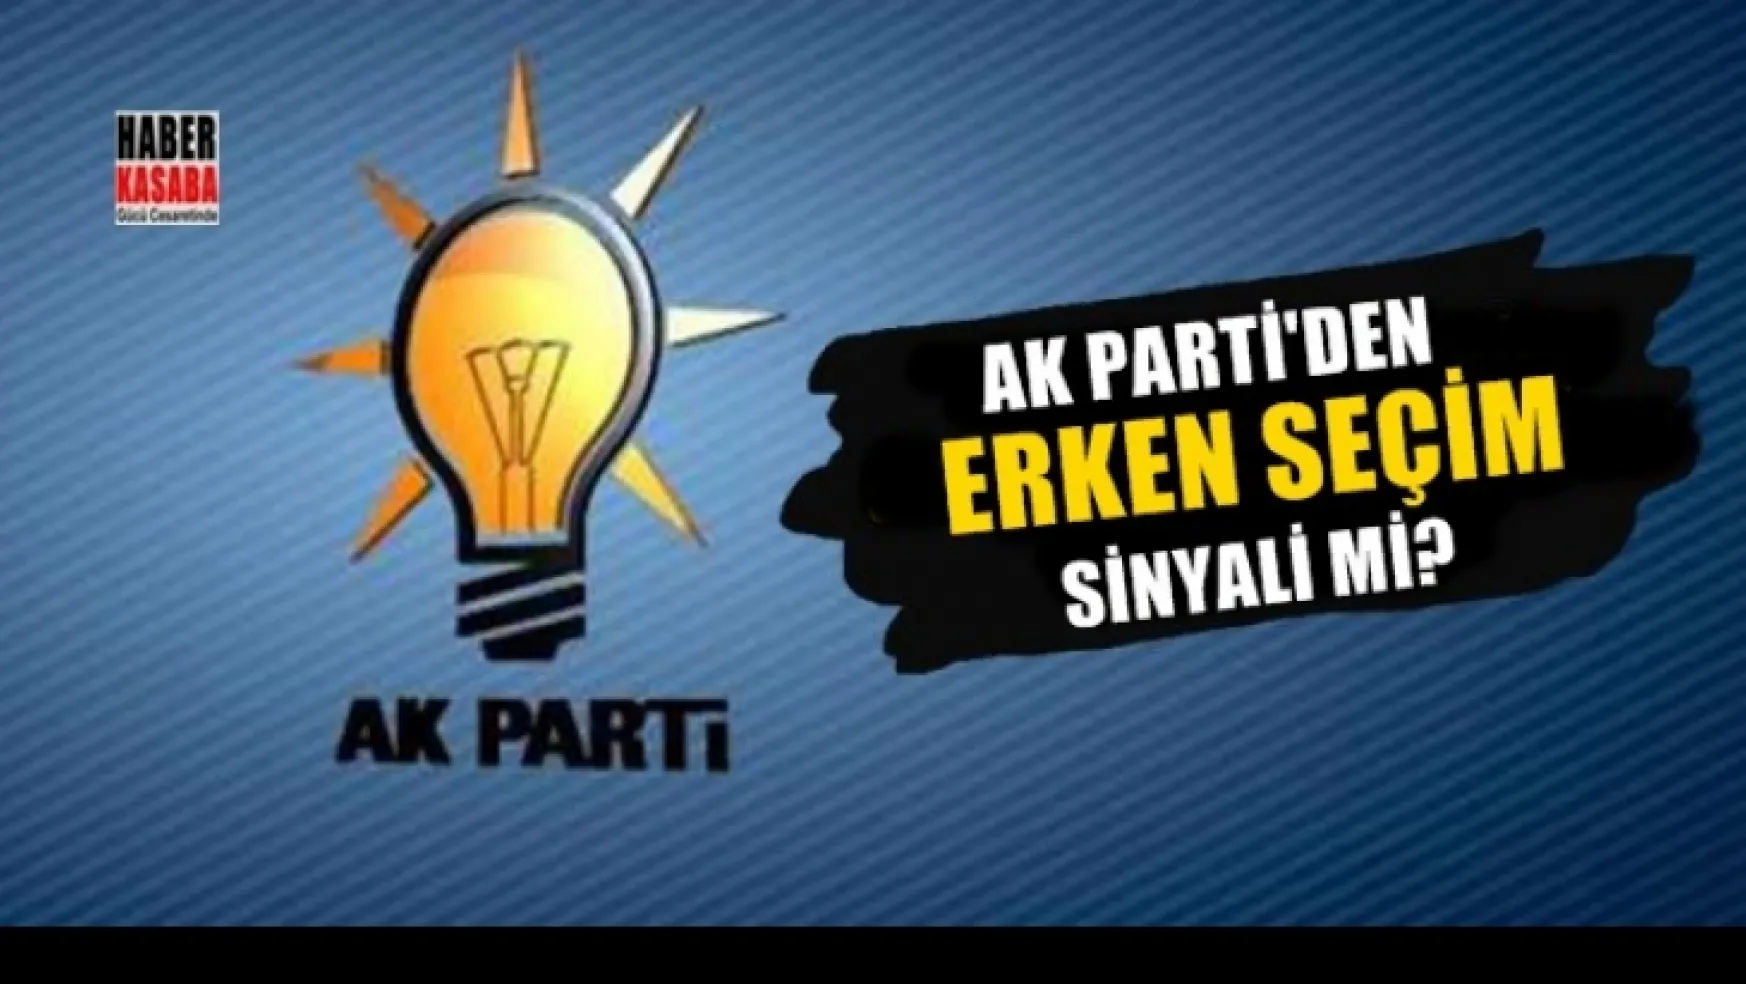 AK Parti'den erken seçim sinyali mi?